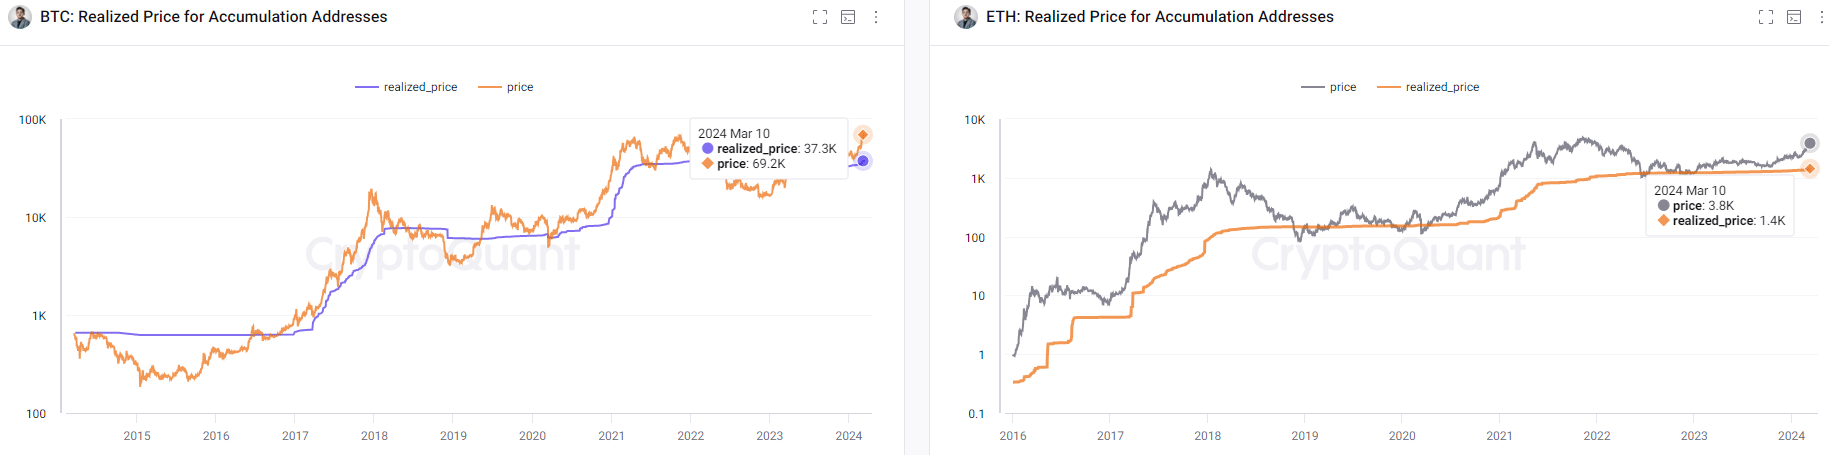 BTC-ETH Realized Prices